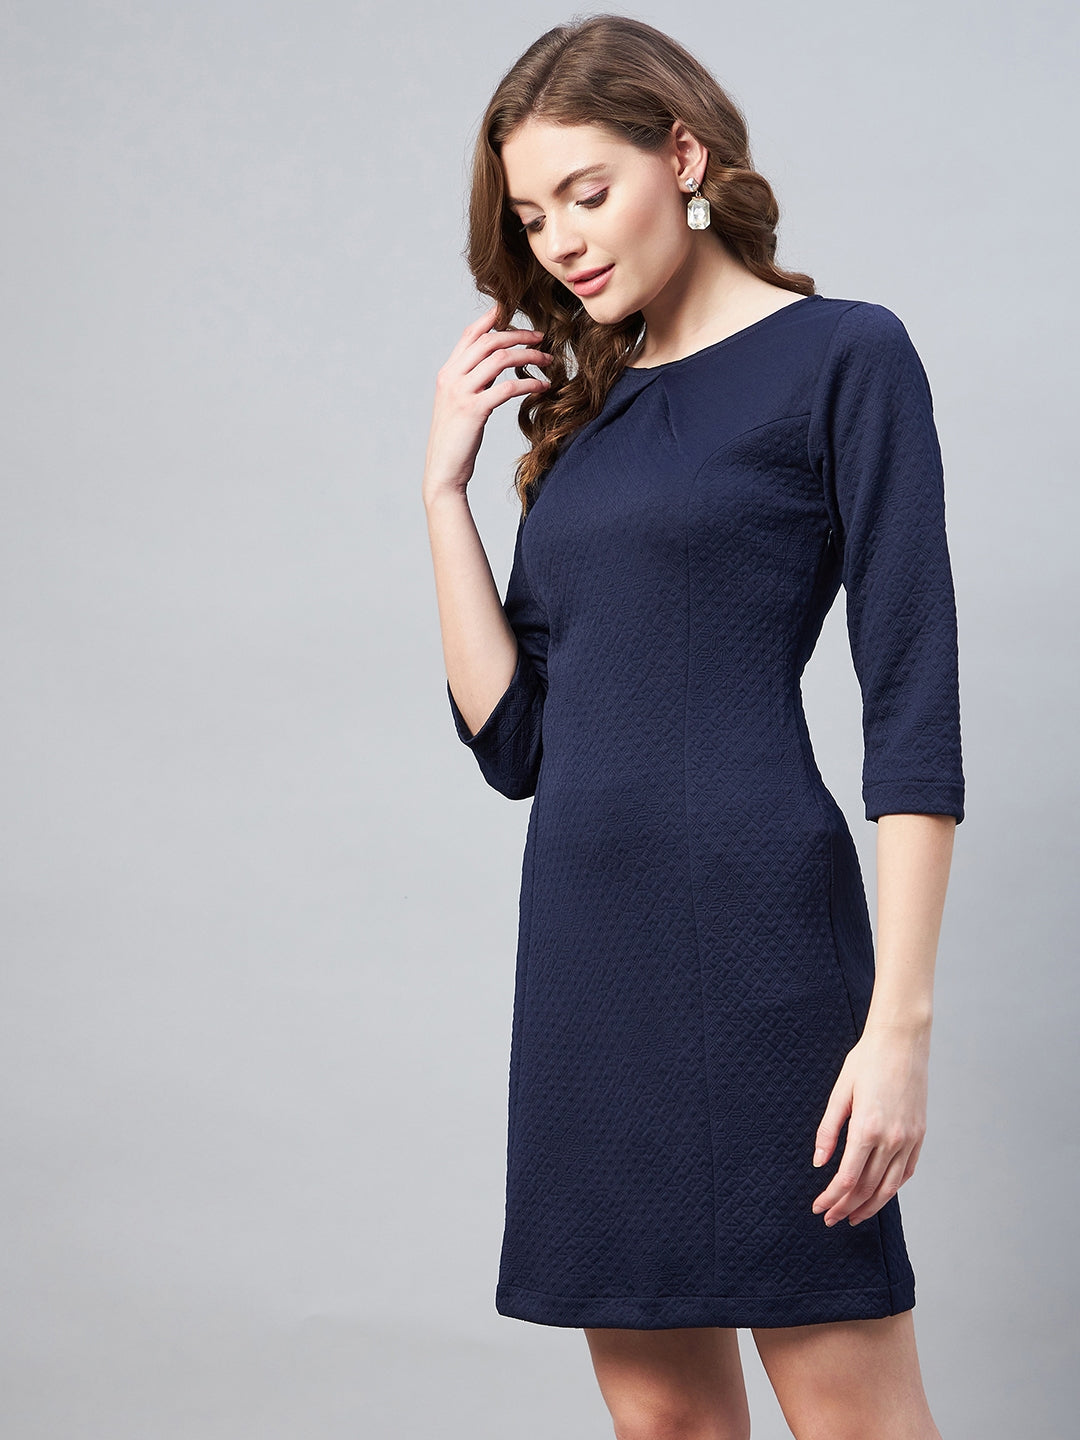 StyleStone Women's Jacquard Self Design Navy Dress